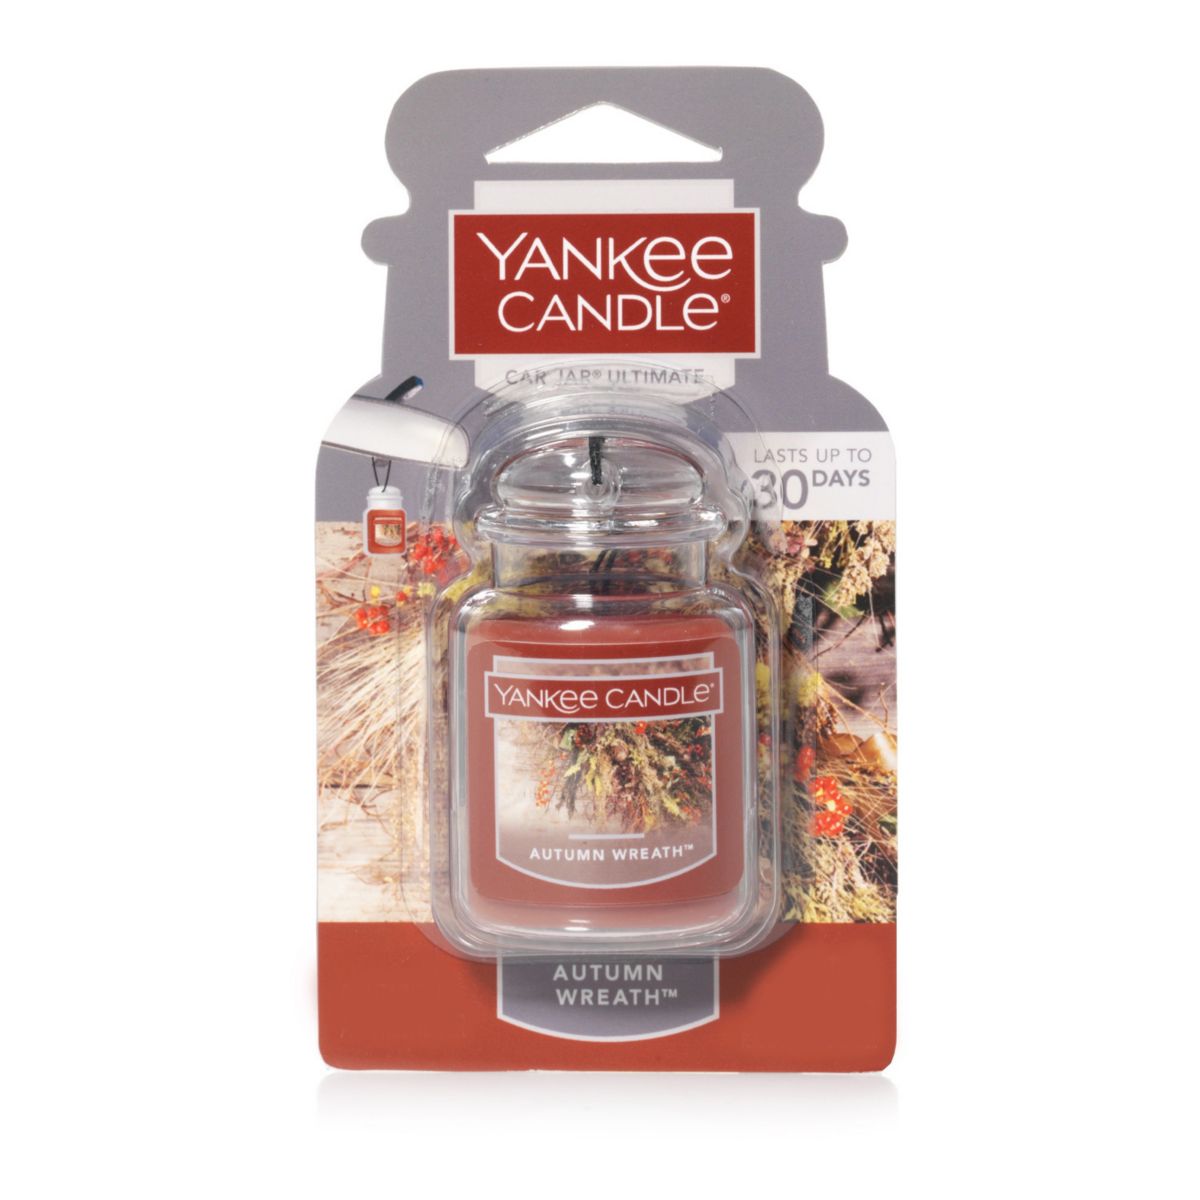 Yankee Candle Autumn Wreath Car Jar Ultimate Yankee Candle